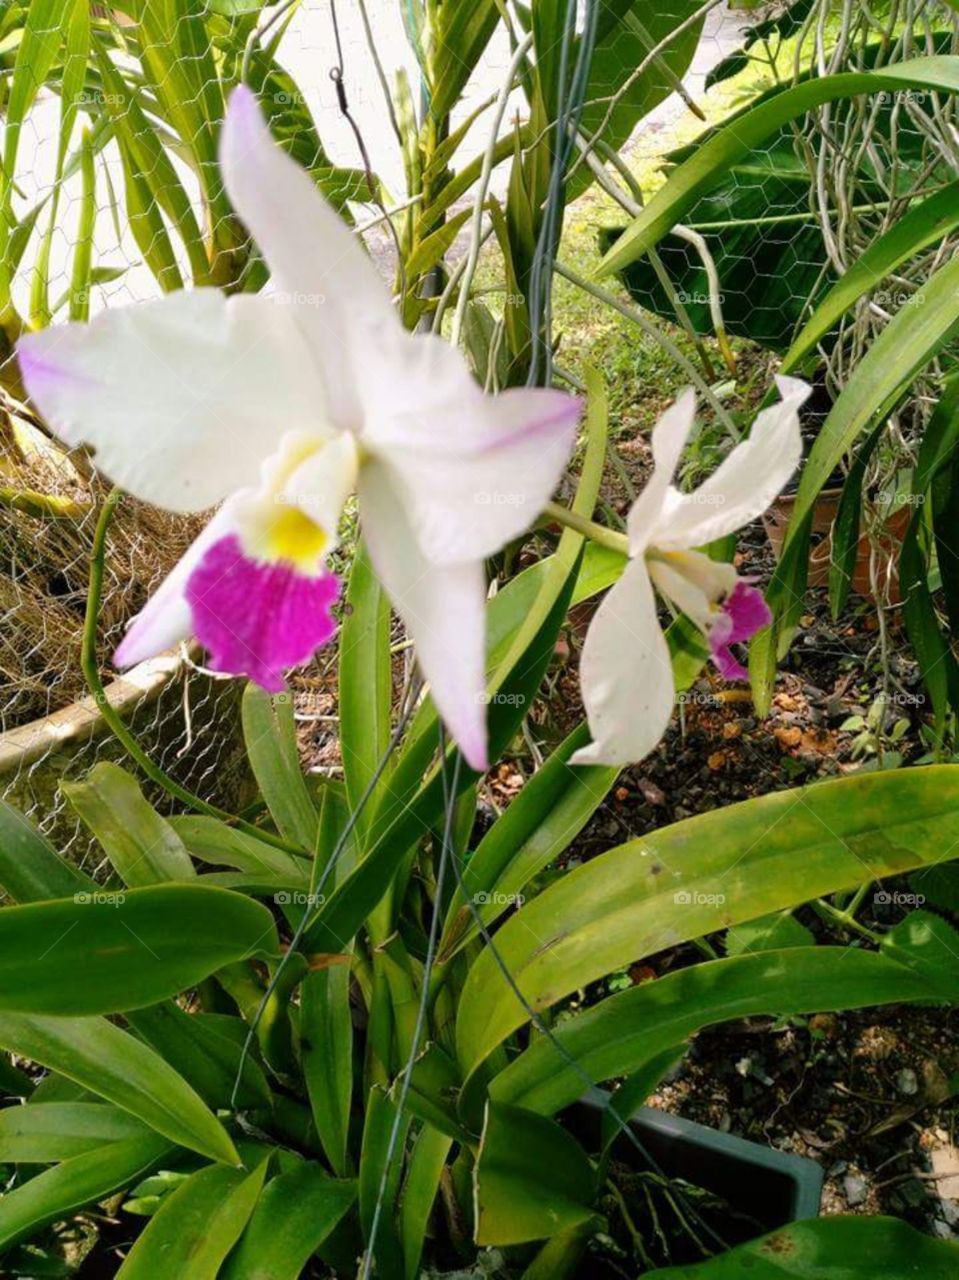 Asia orkid